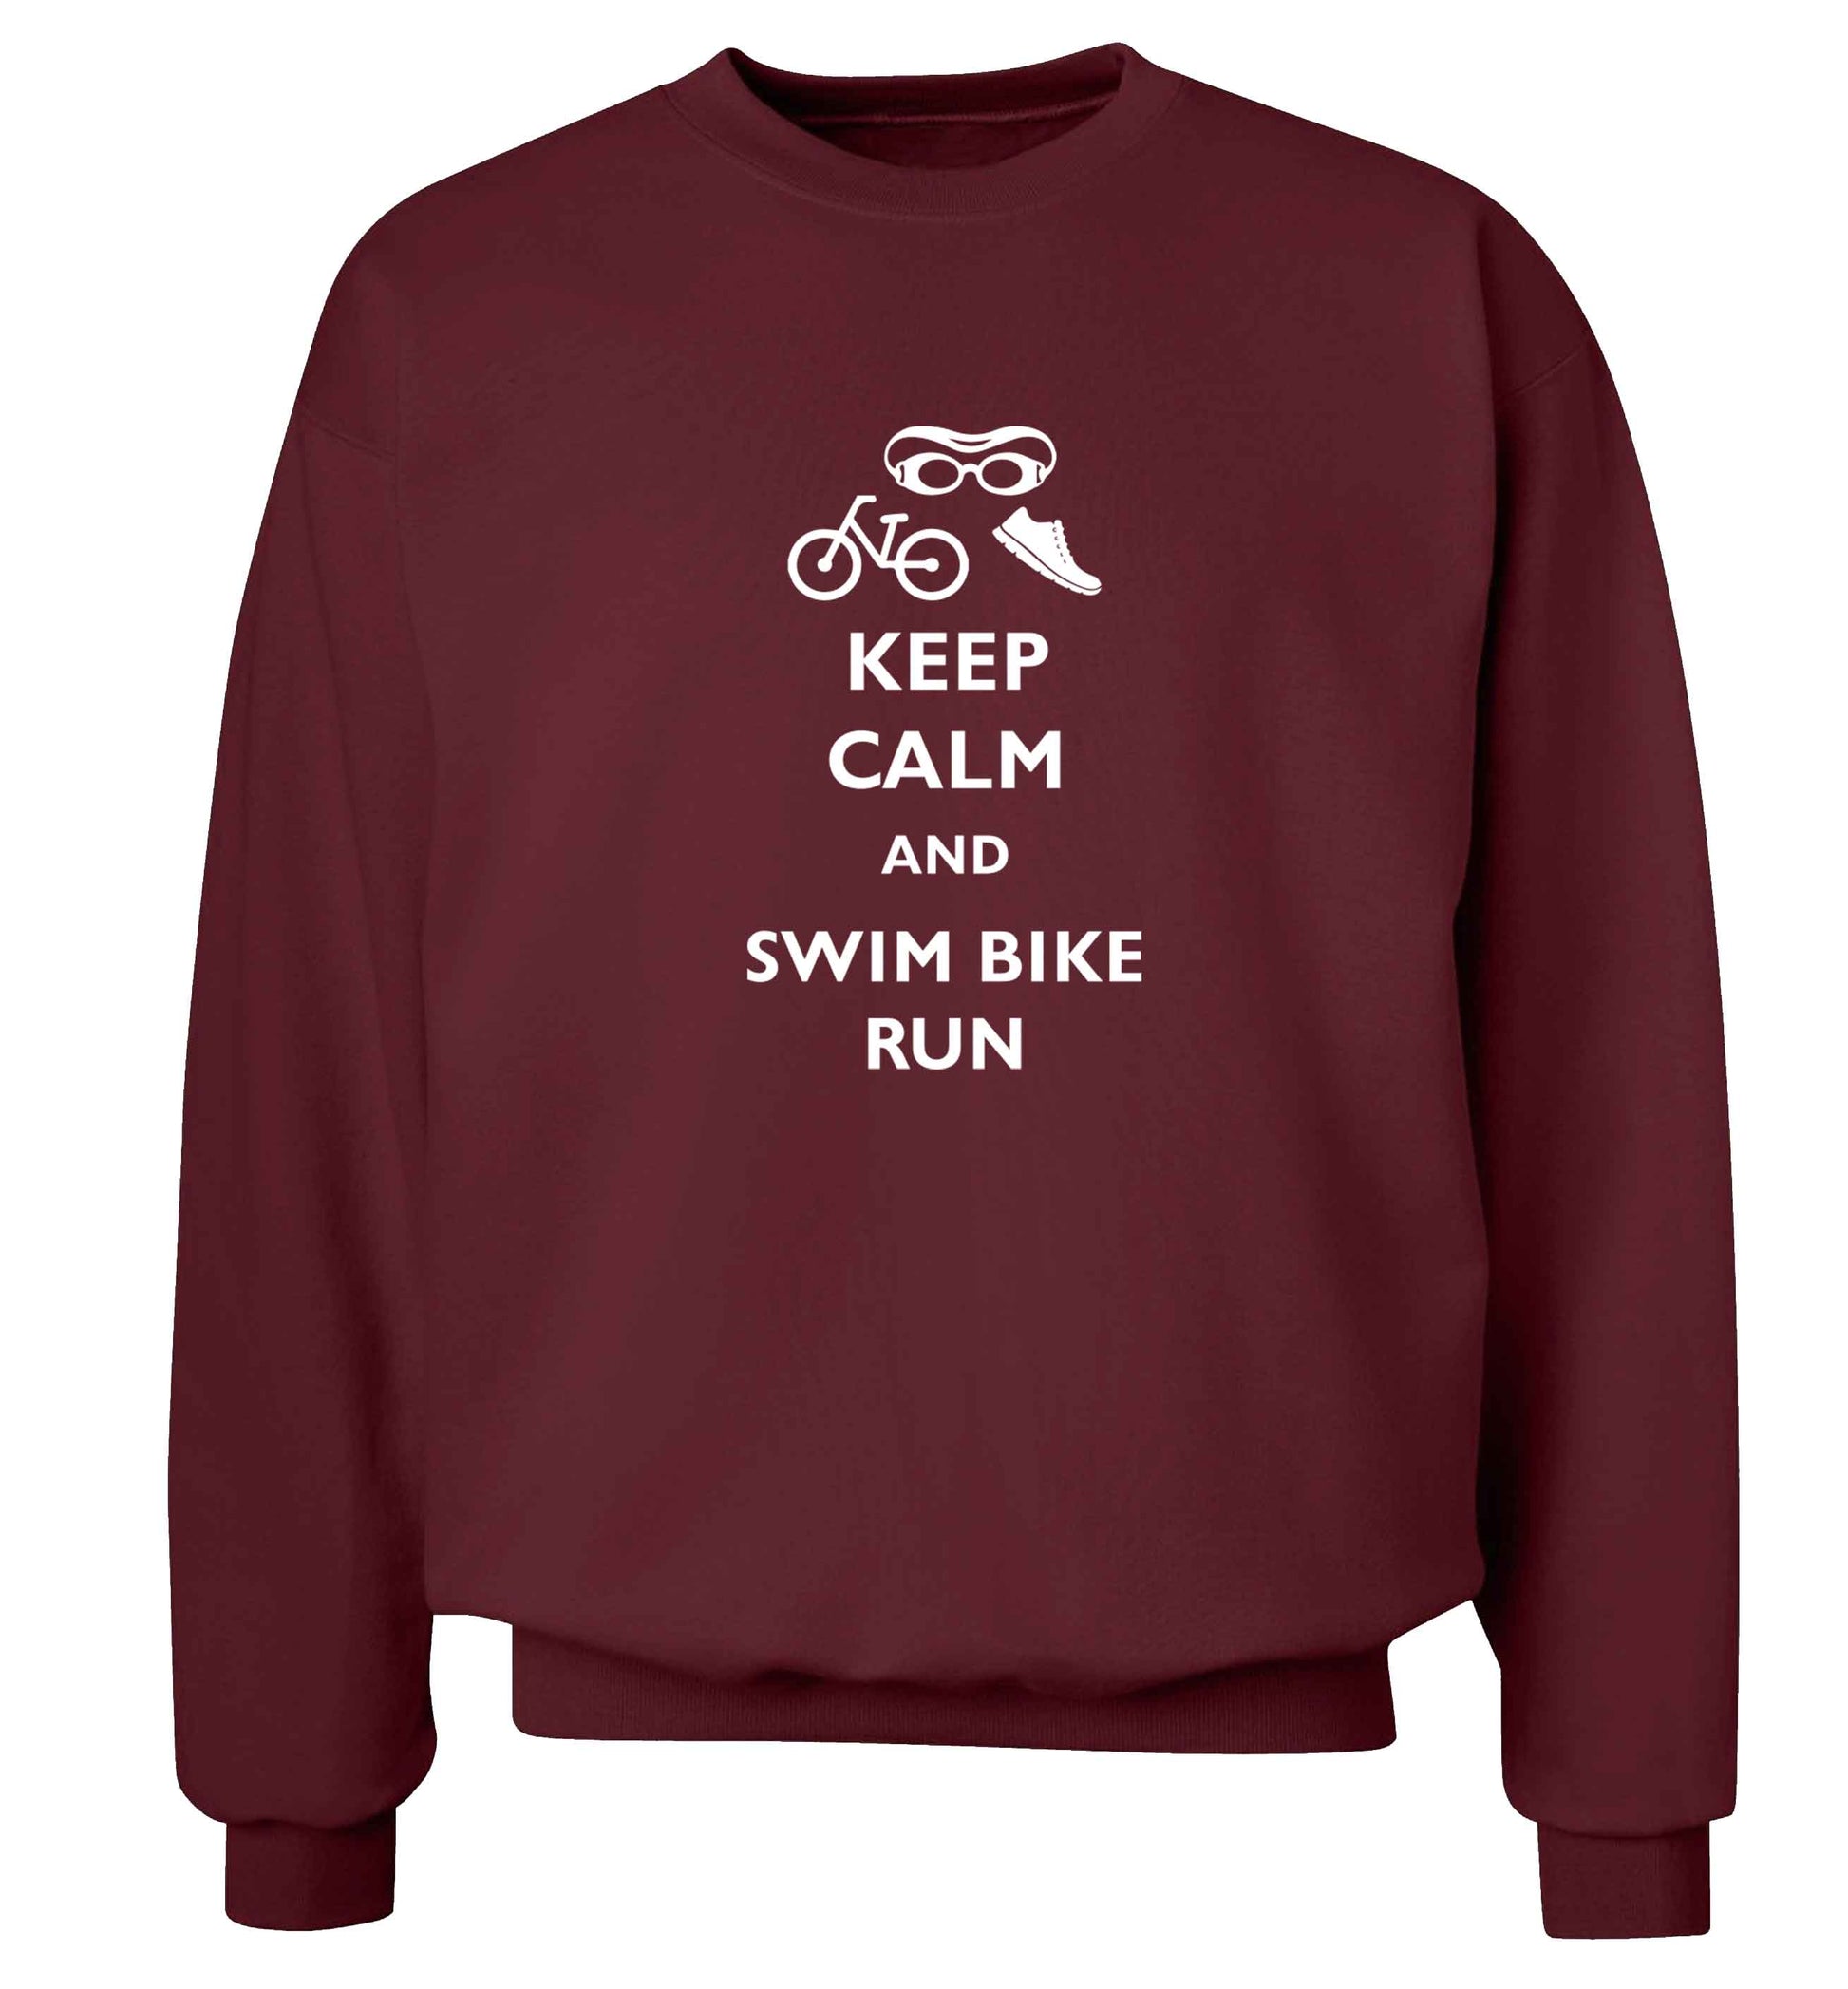 Keep calm and swim bike run adult's unisex maroon sweater 2XL